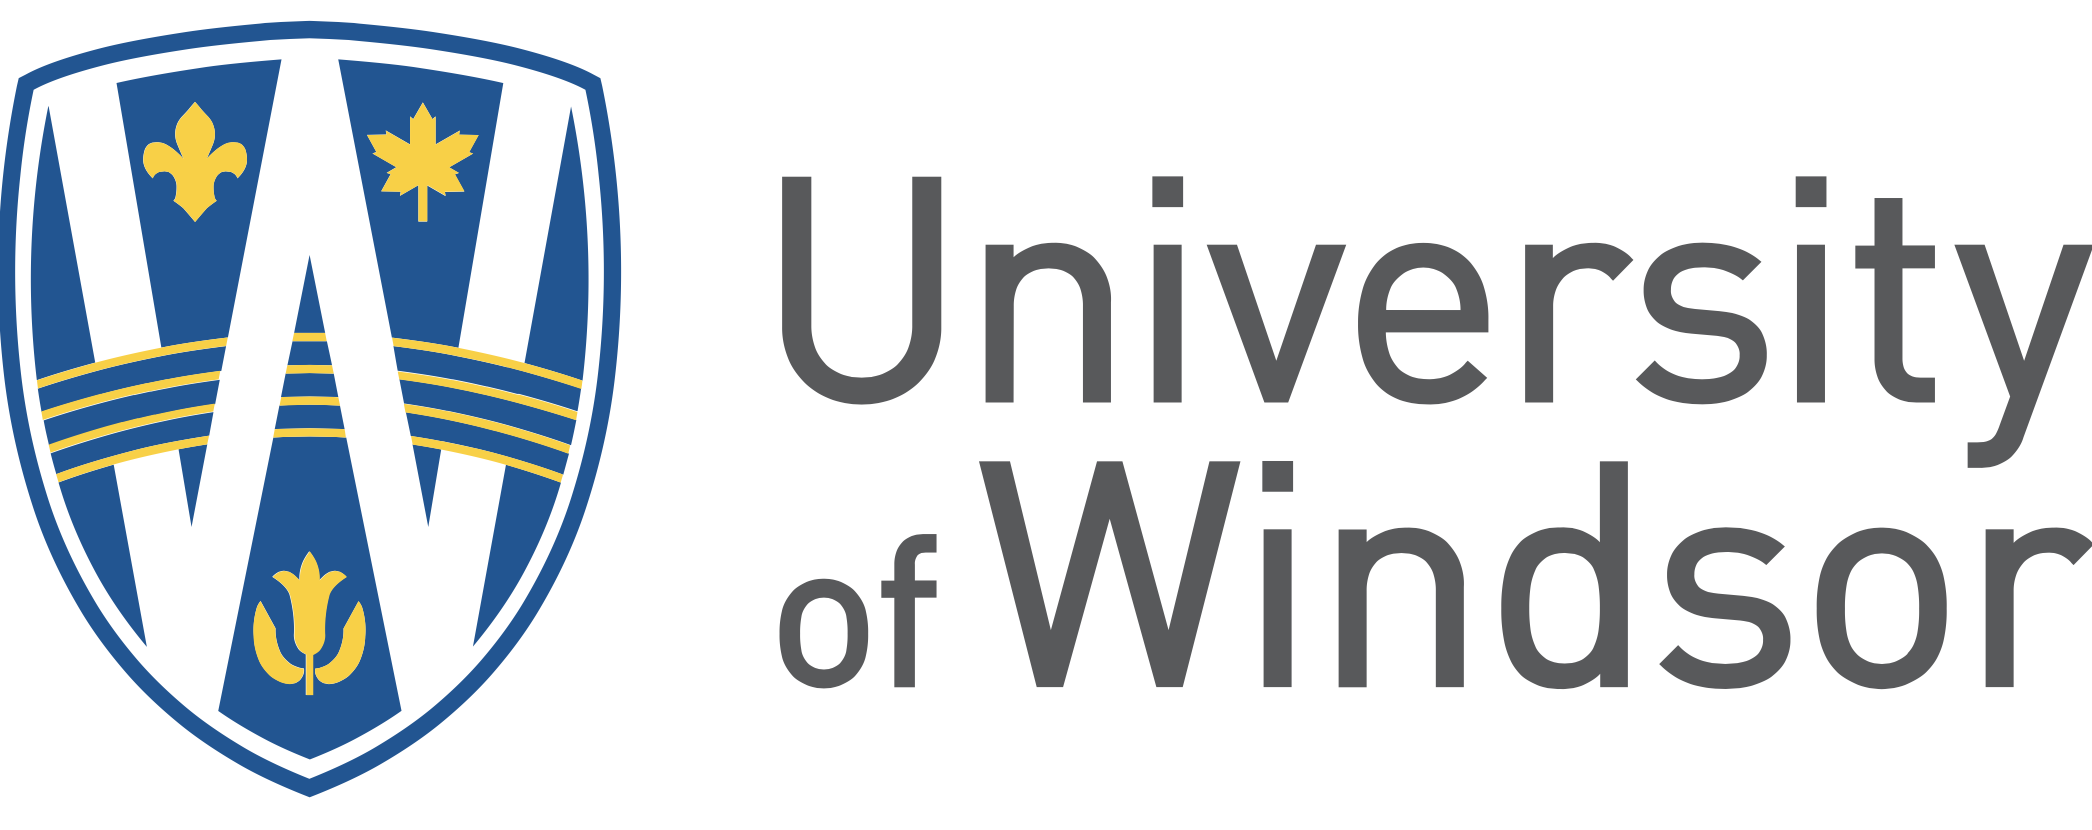 Uni of windsor